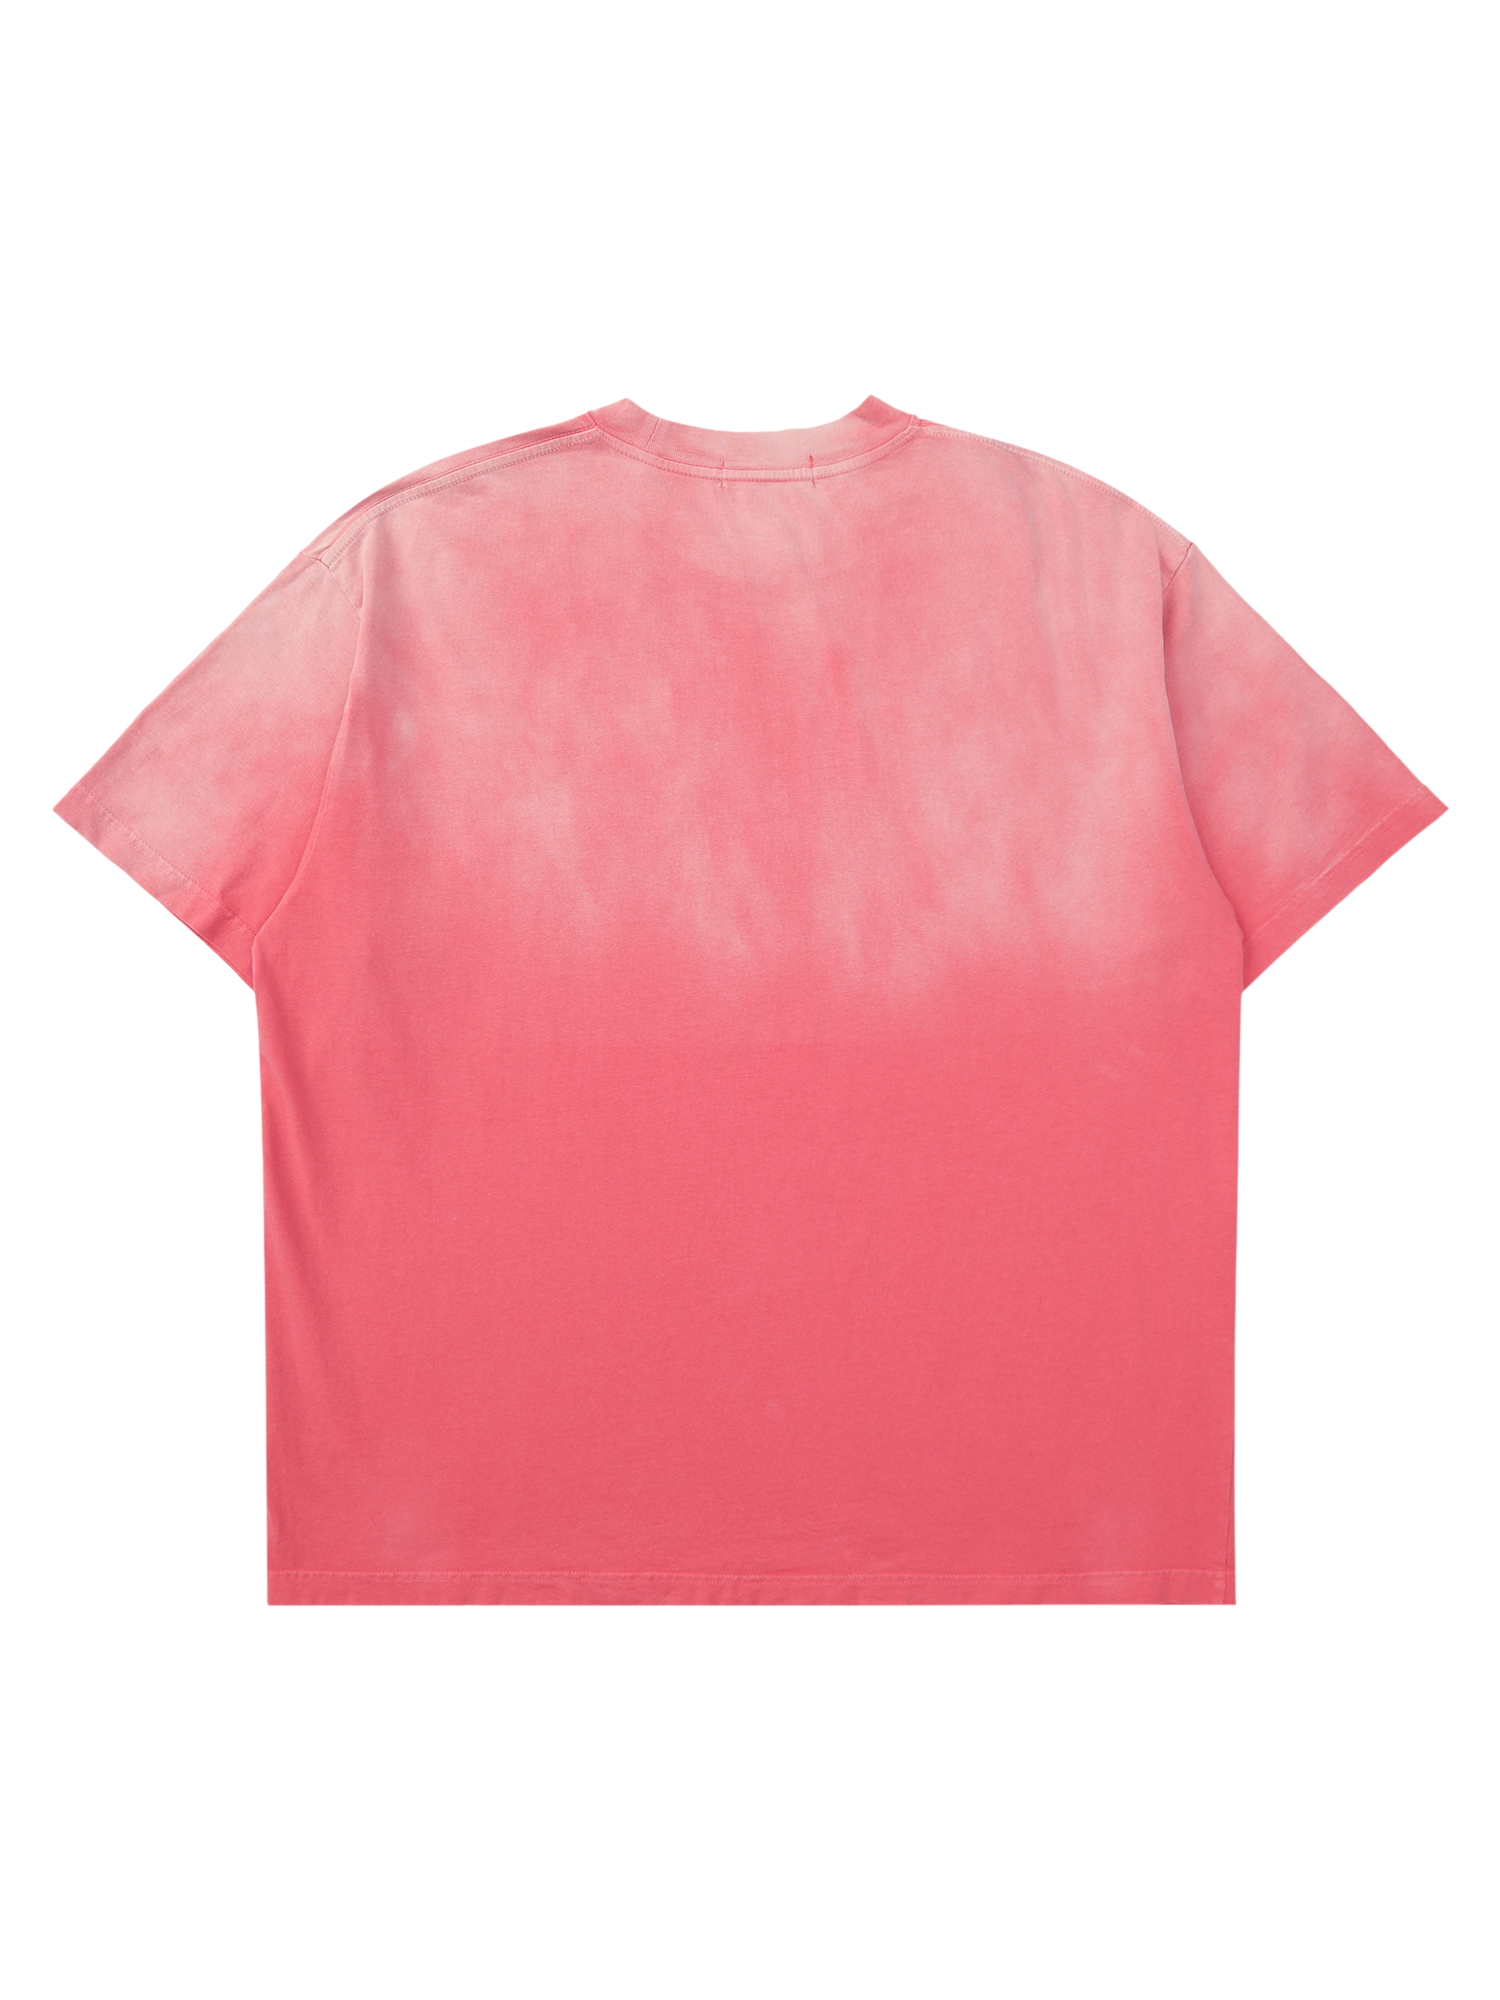 Thesupermade Tie-dye Gradient Rivet Street Rap T-shirt